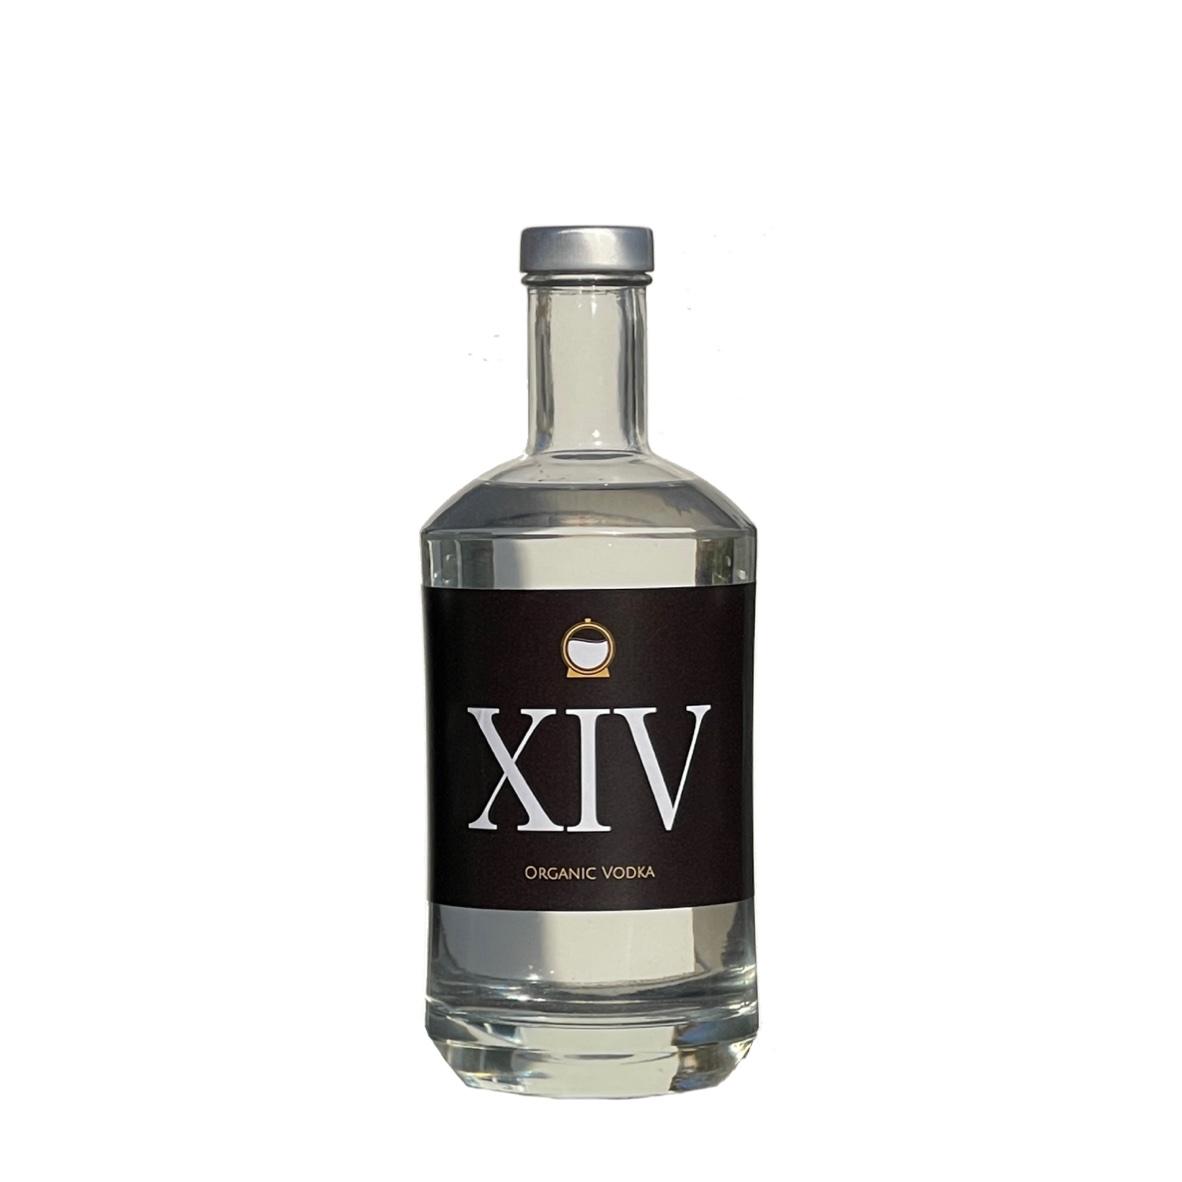 XIV Vodka 700ml